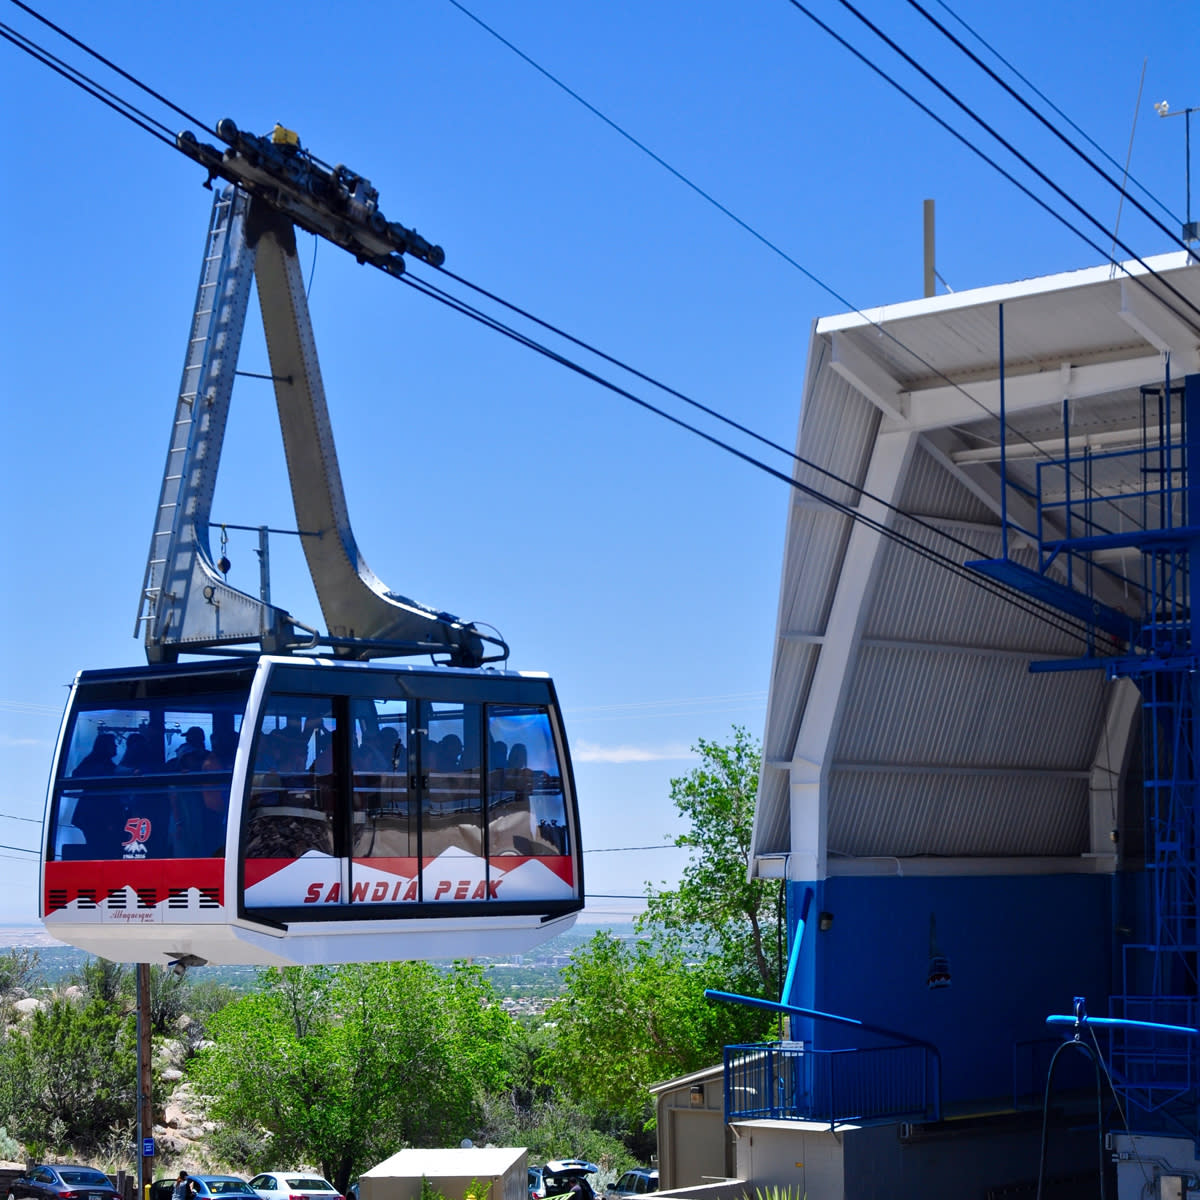 Sandia peak tram tower 1 #albuquerque #newmexico #sandiamountains